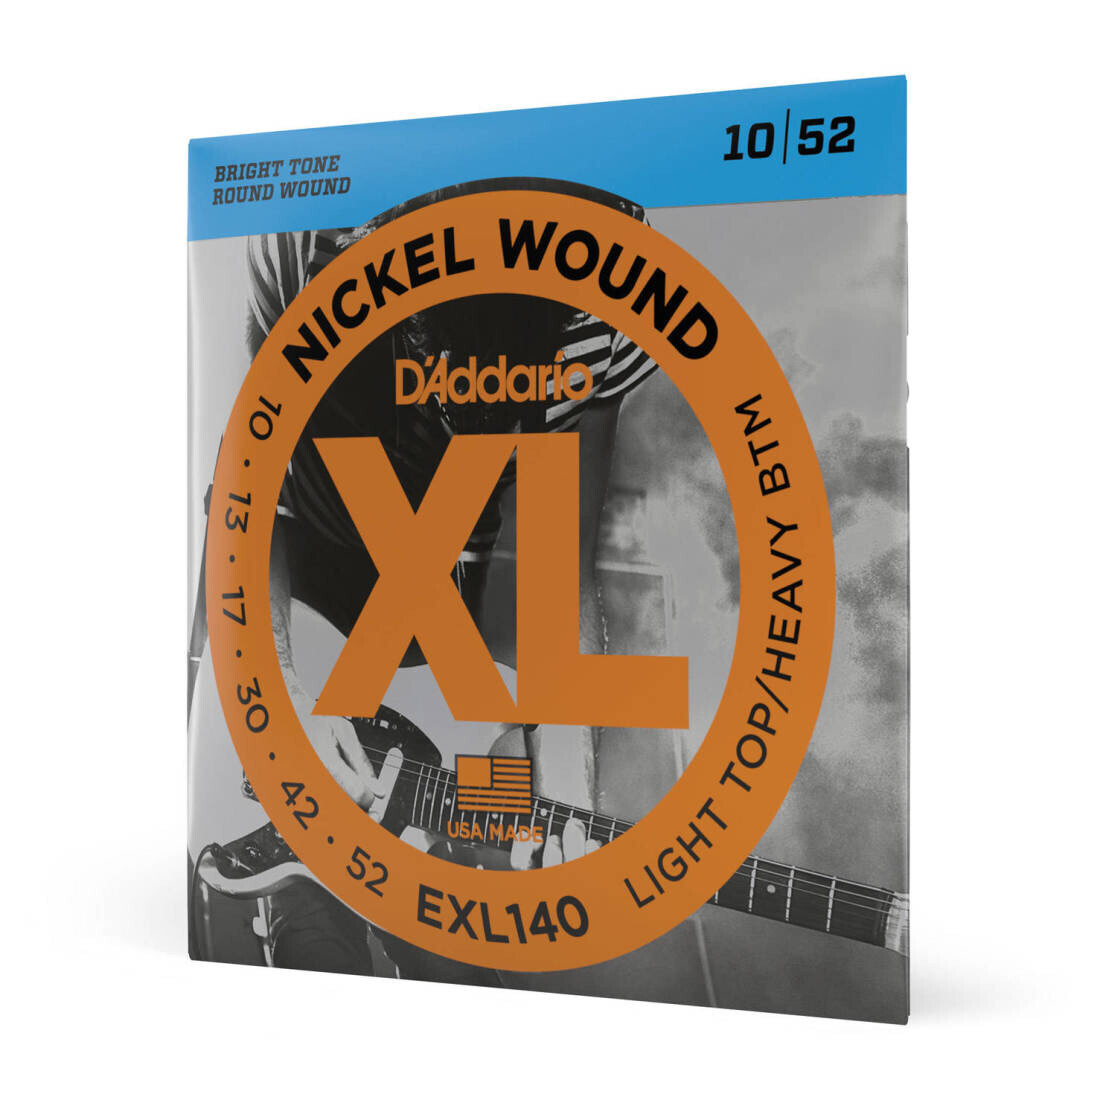 D’Addario XL Nickel Wound Light Top Heavy Bottom Electric Guitar Strings EXL140